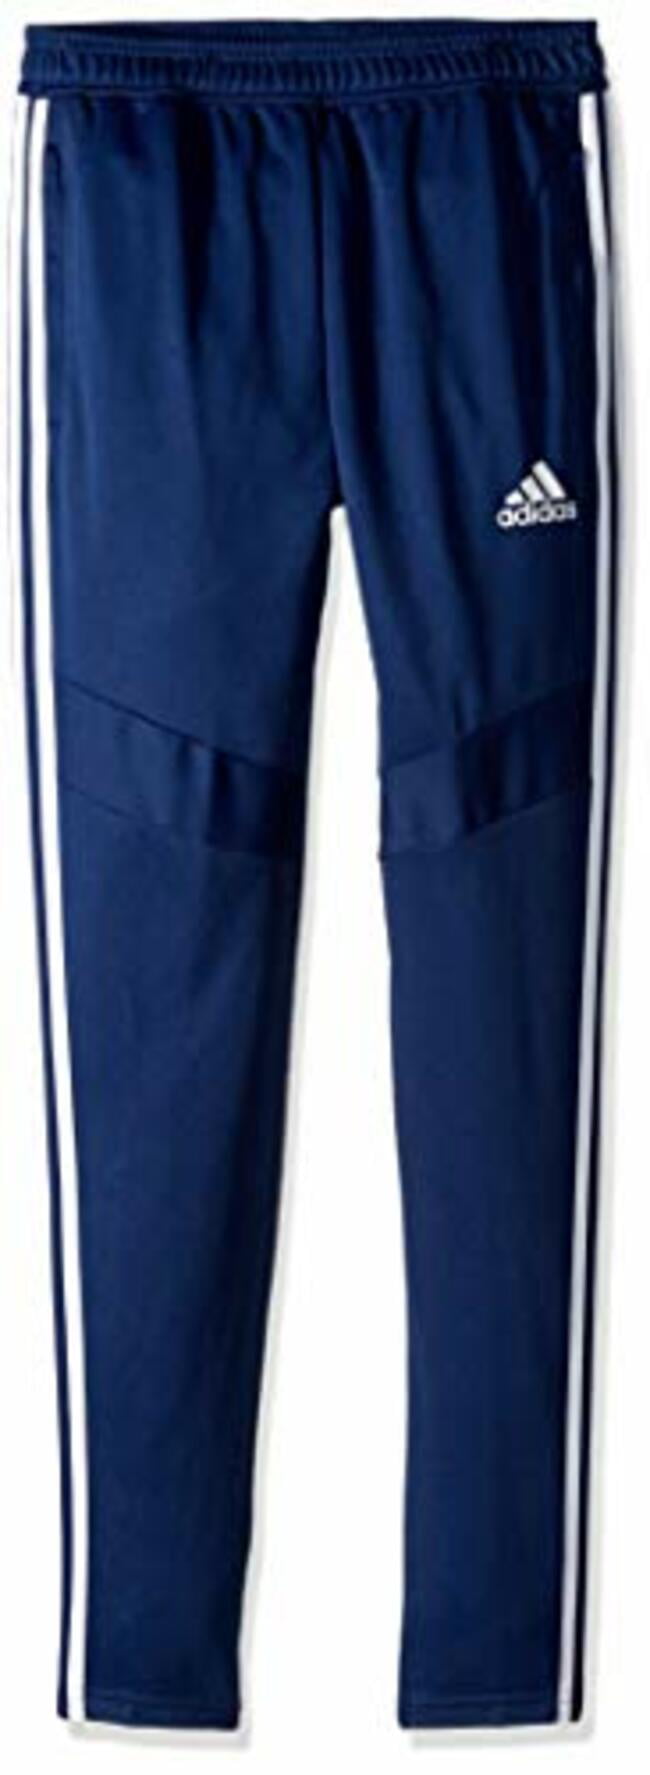 navy blue adidas pants